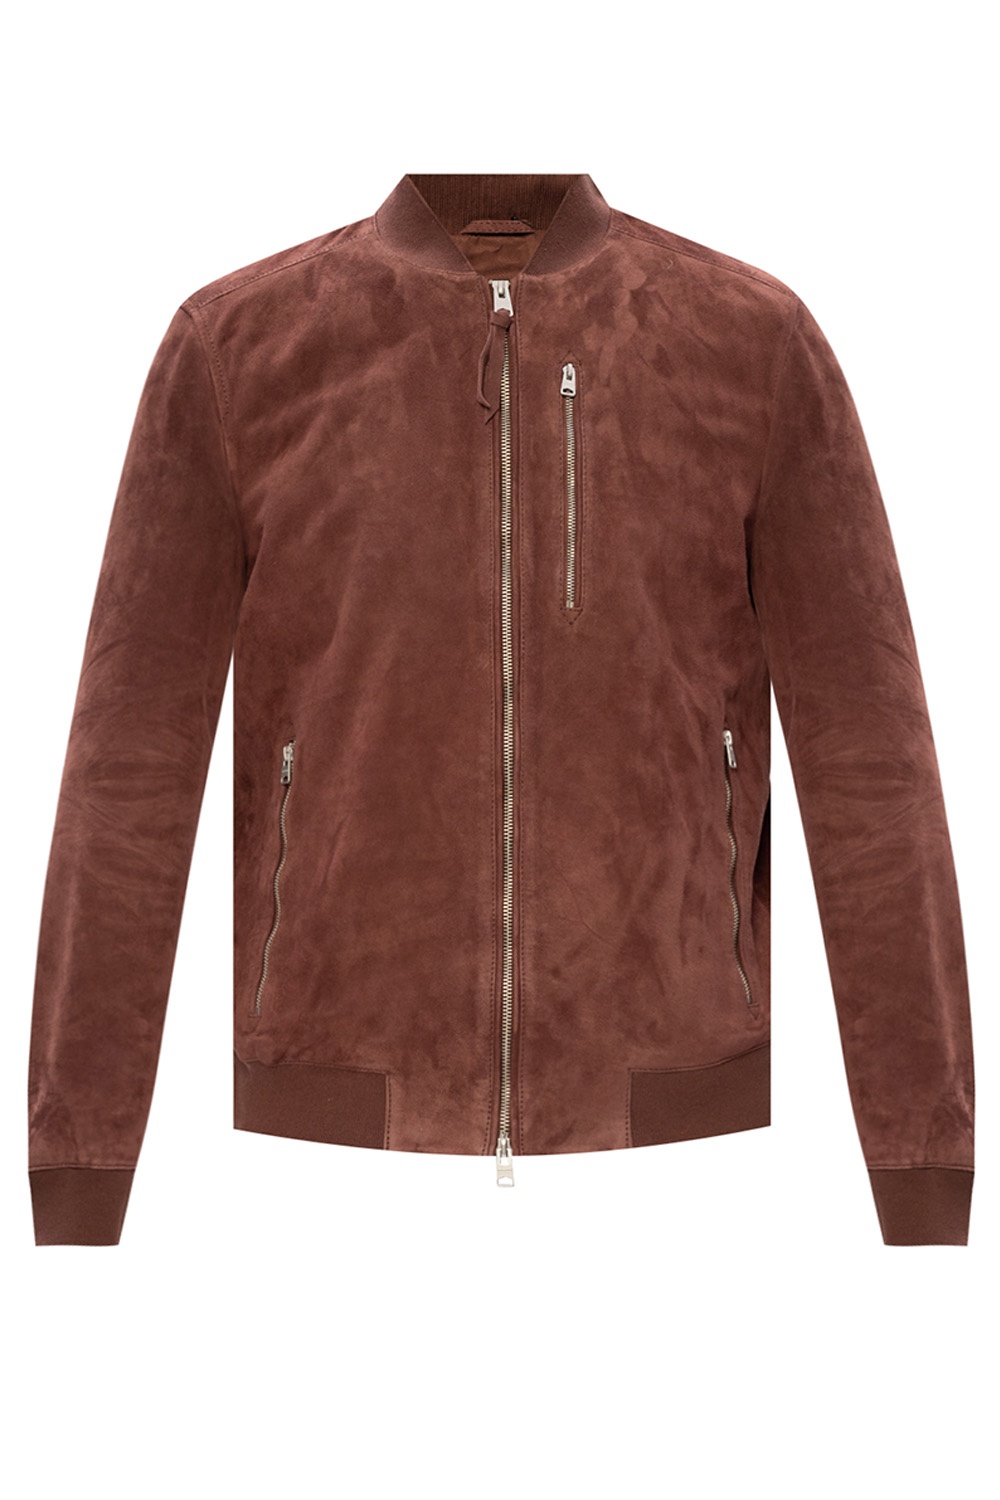 AllSaints 'Kemble' suede bomber jacket | Men's Clothing | Vitkac